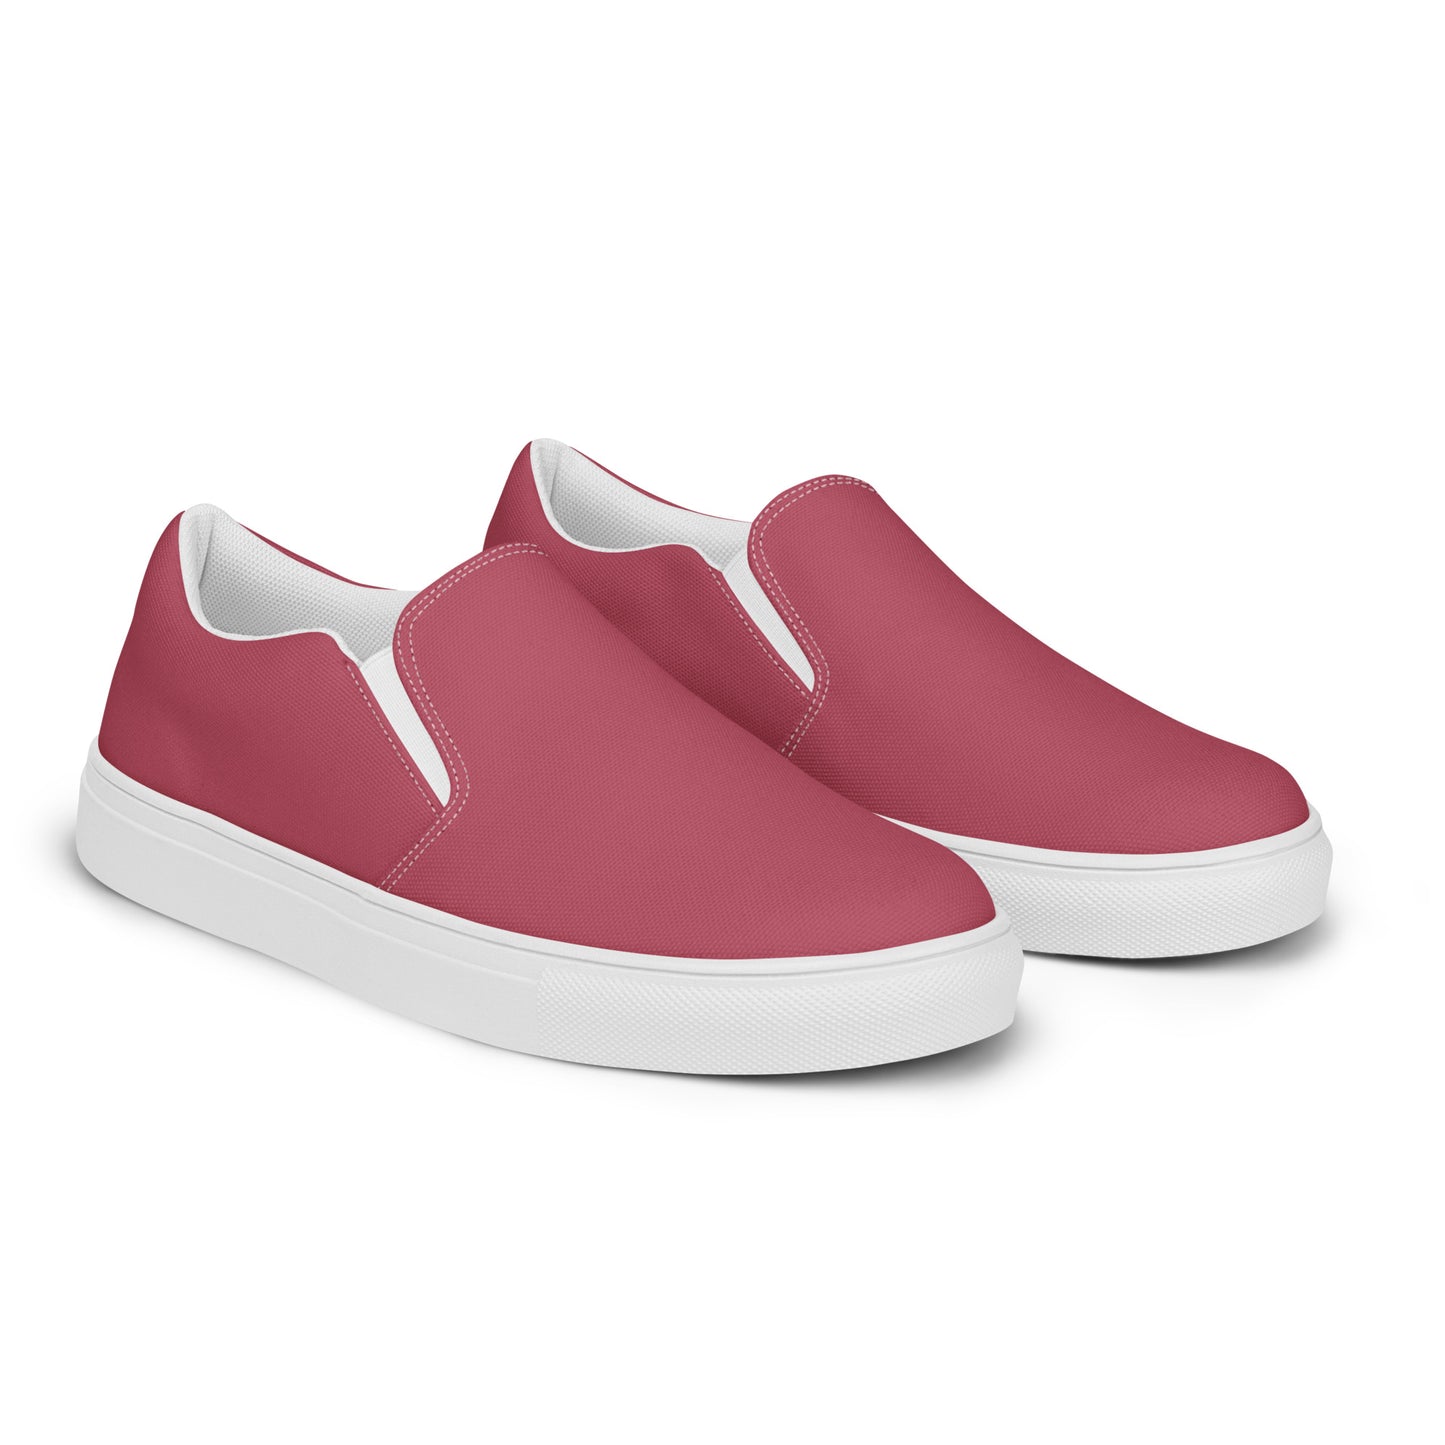 Women’s Hippie Pink Slip-on Canvas Shoes